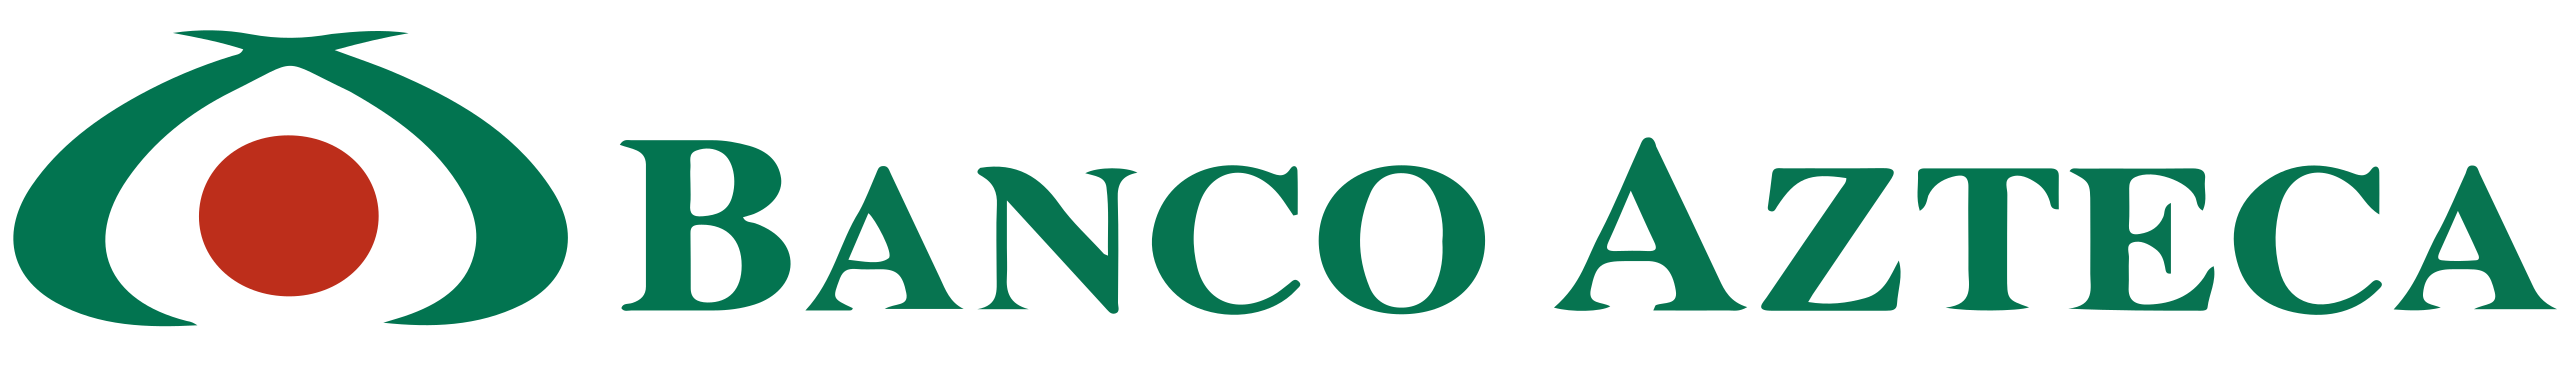 Banco Azteca logo